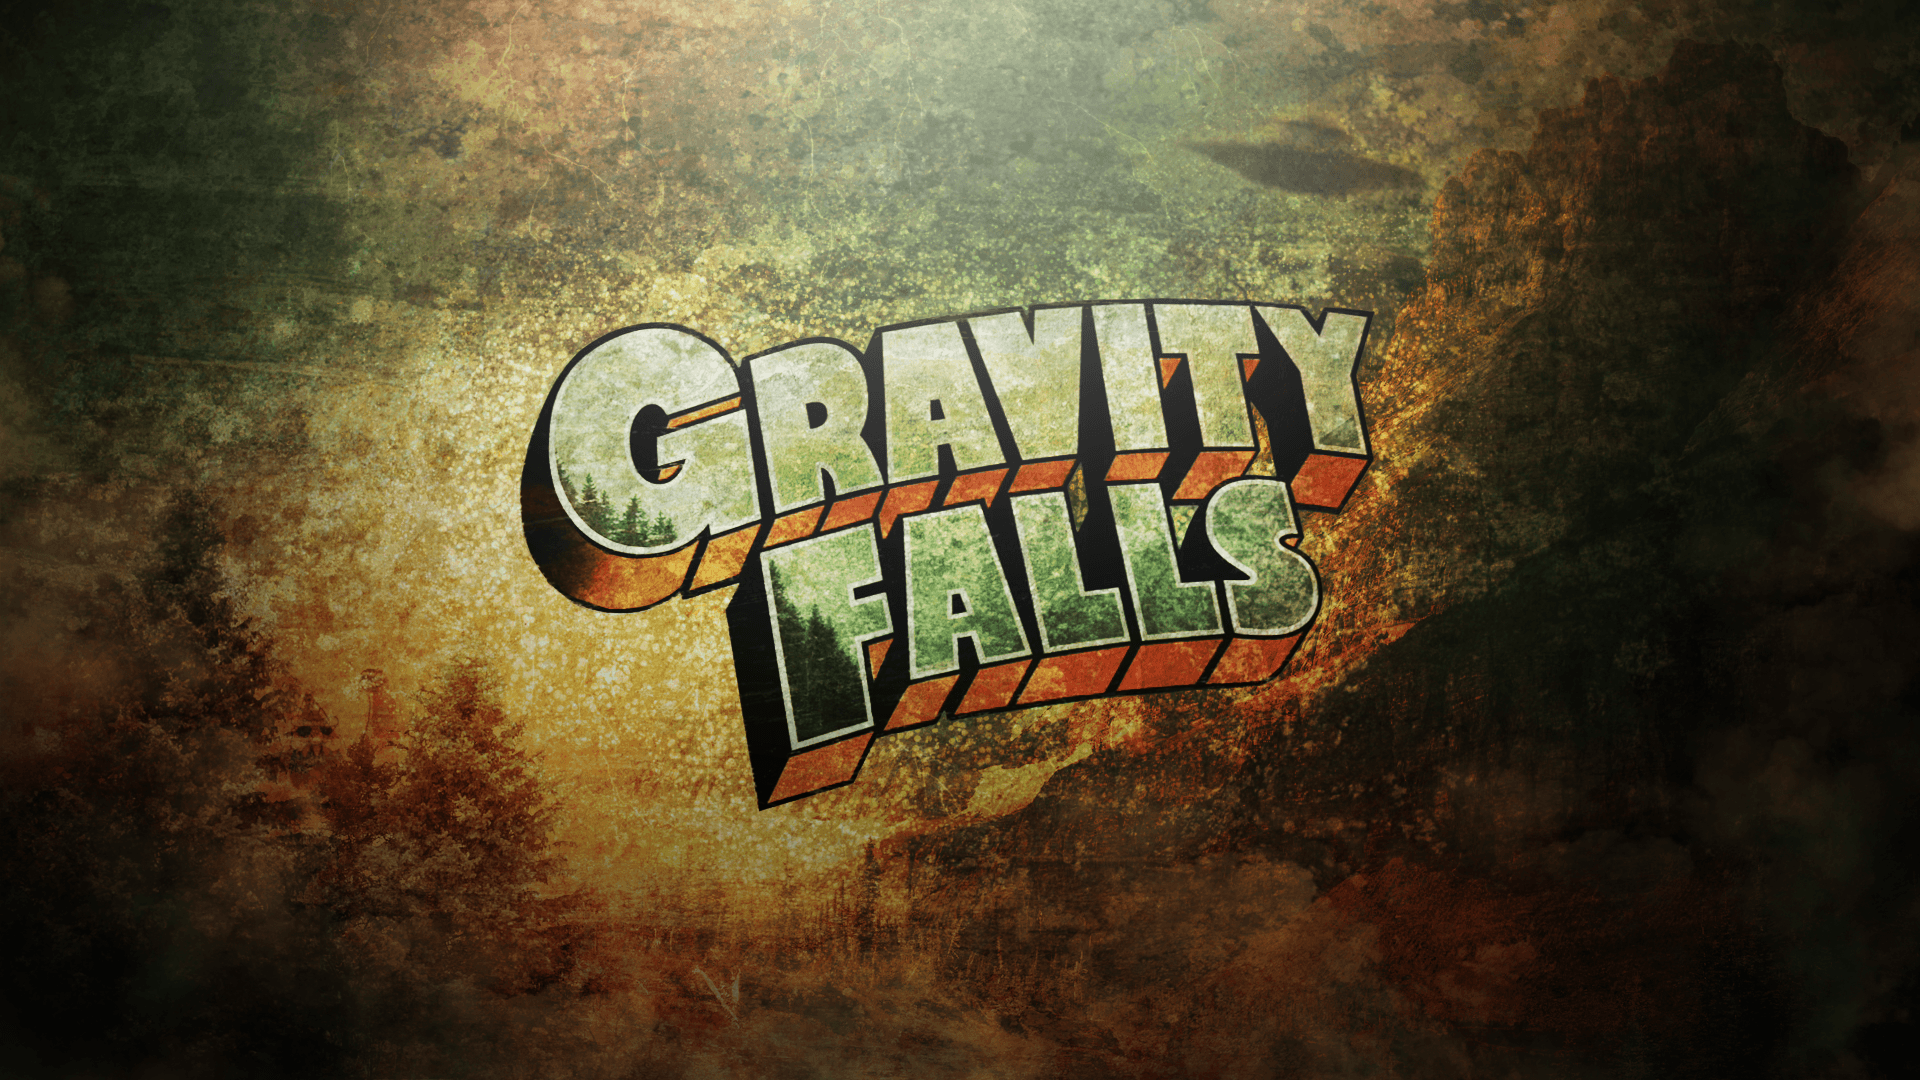 Gravity Falls Wallpaper, Gravity Falls Wallpaper Free Download